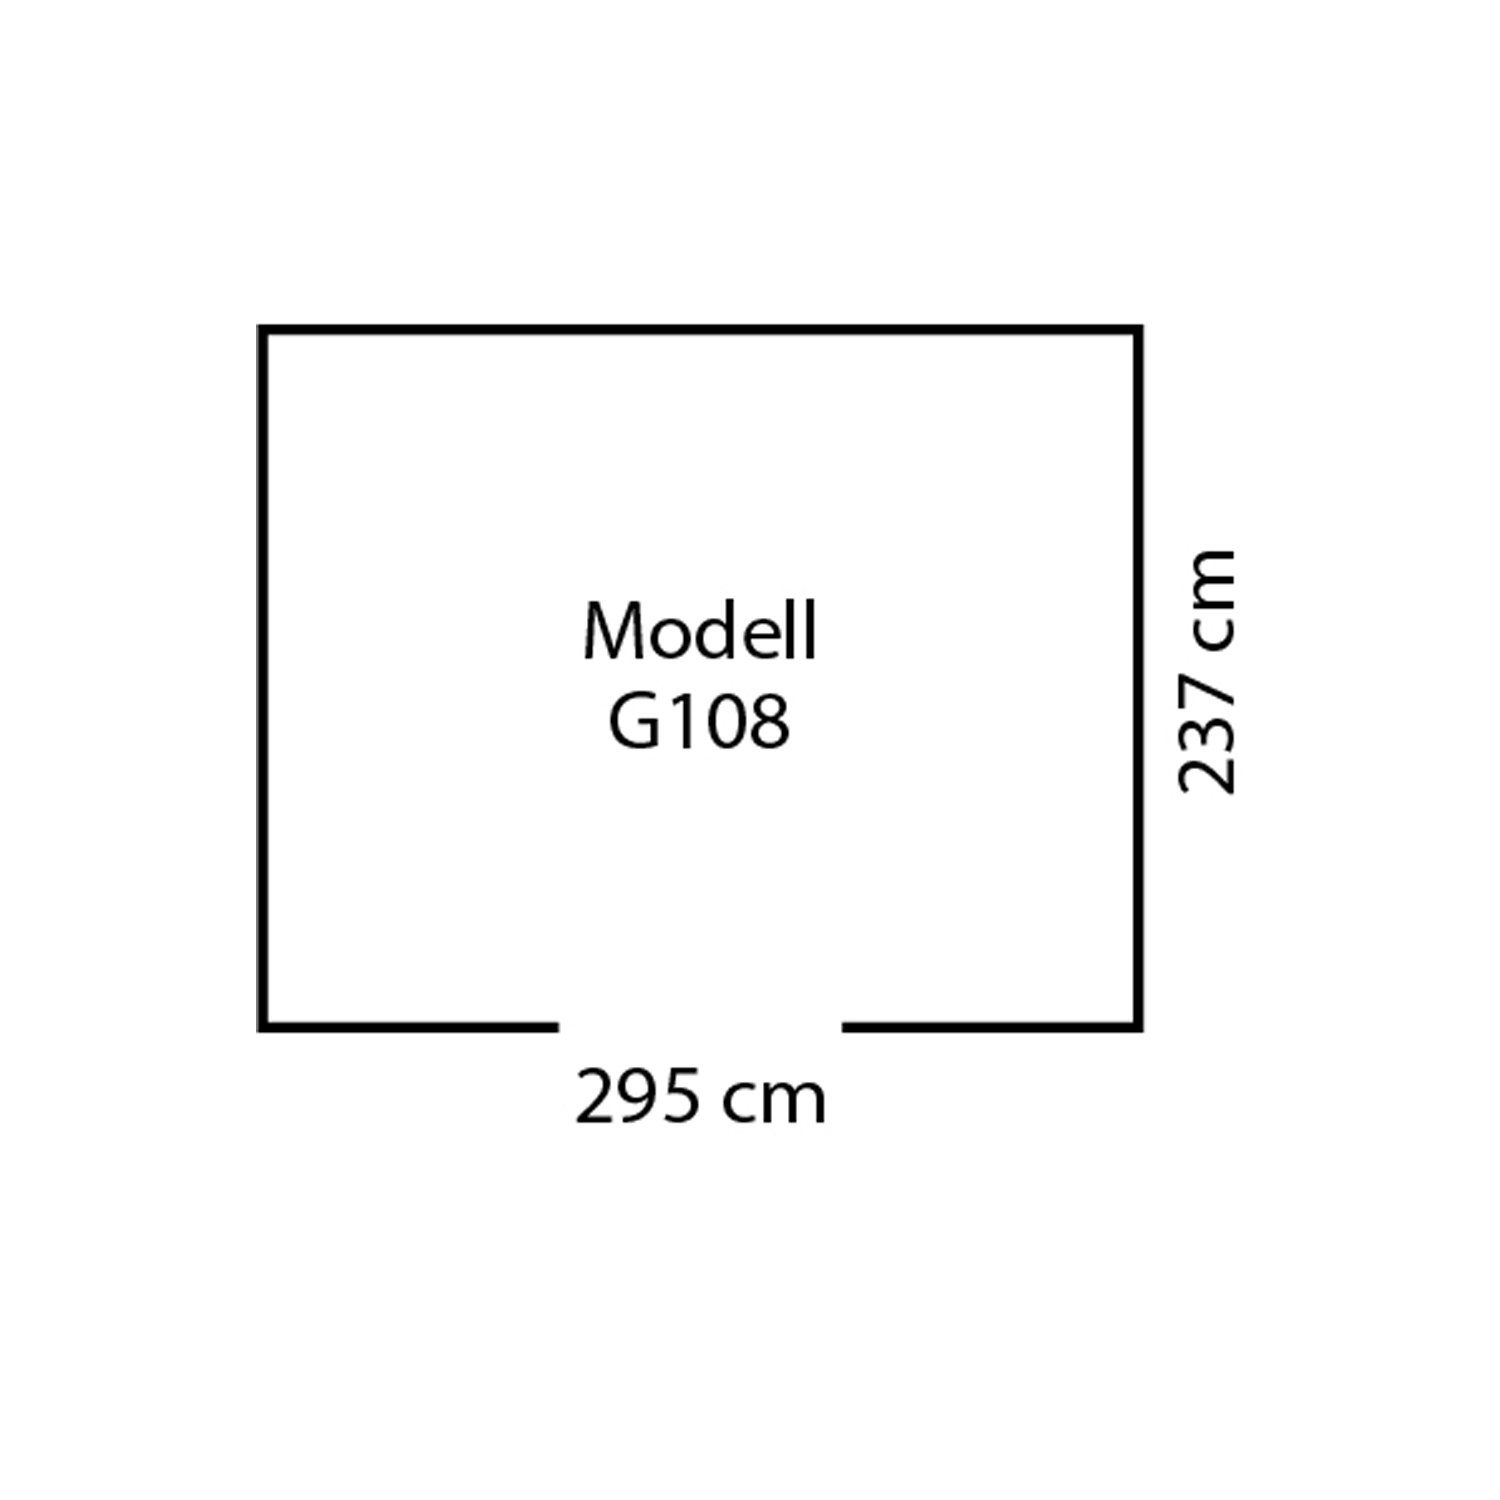 / Metall-Gartenmanager 108" jade m) Industries Globel (7,61 "Dream Gerätehaus